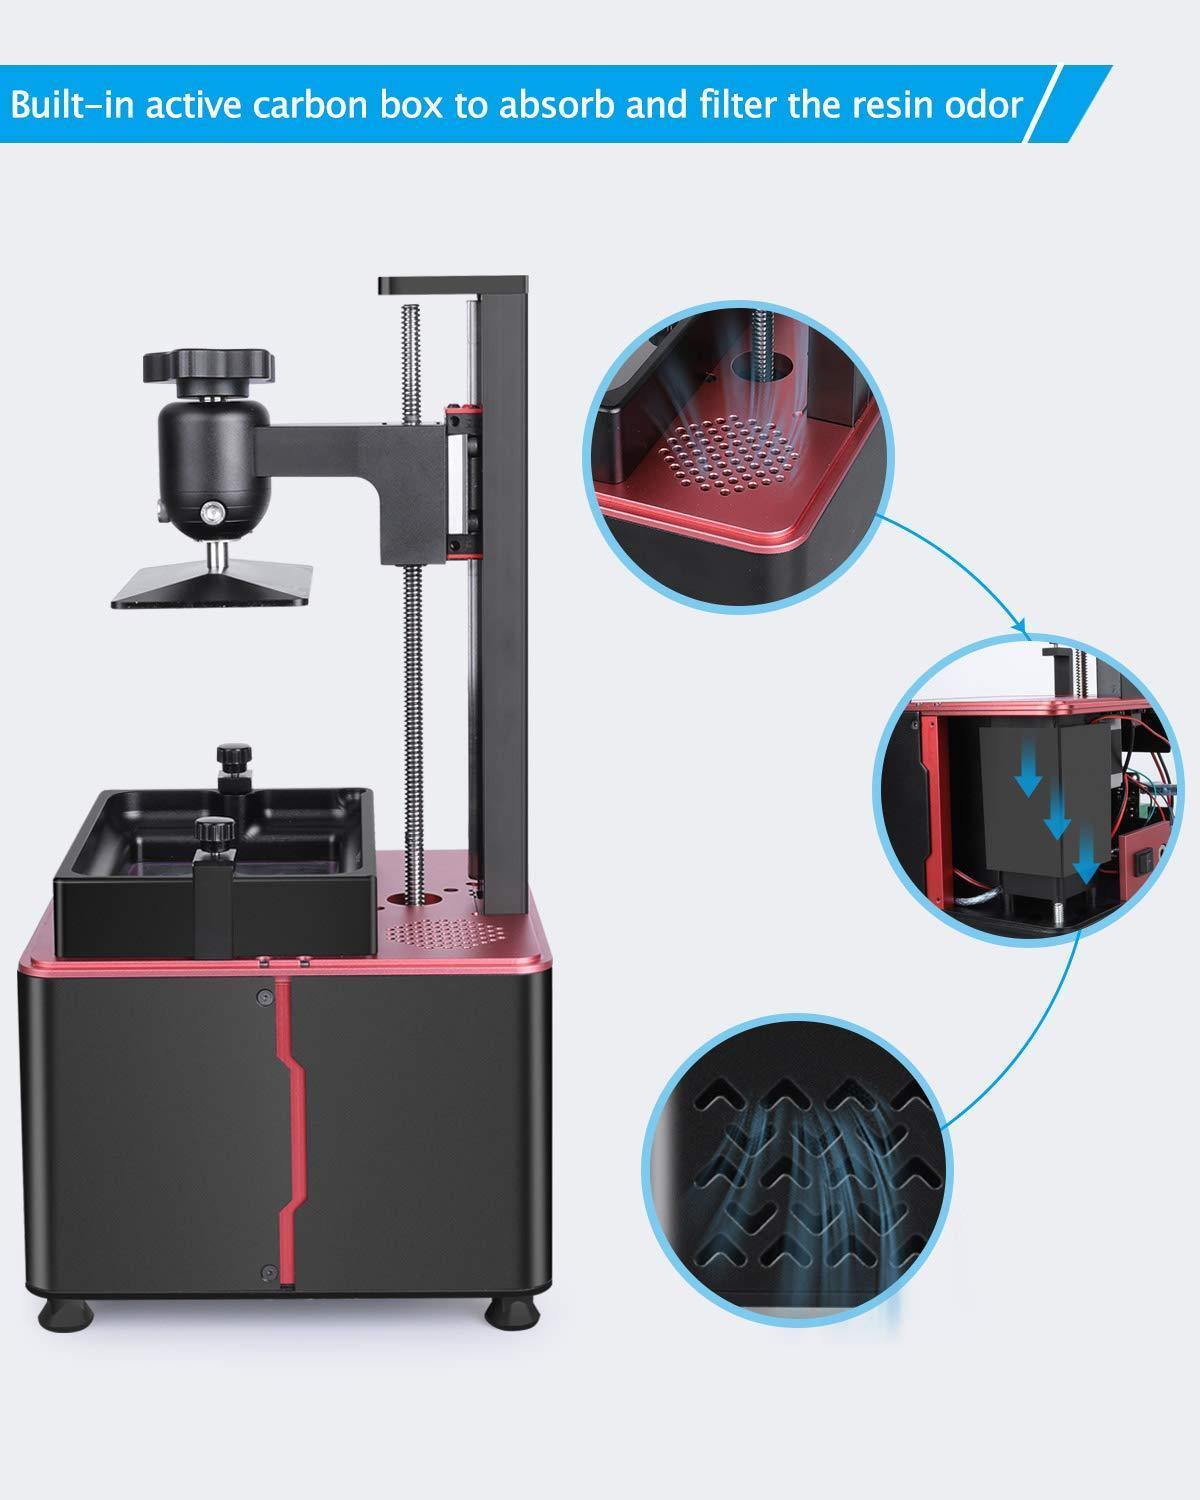 ELEGOO Mars 2 Pro Mono LCD MSLA Resin 3D Printer with Air Purifier